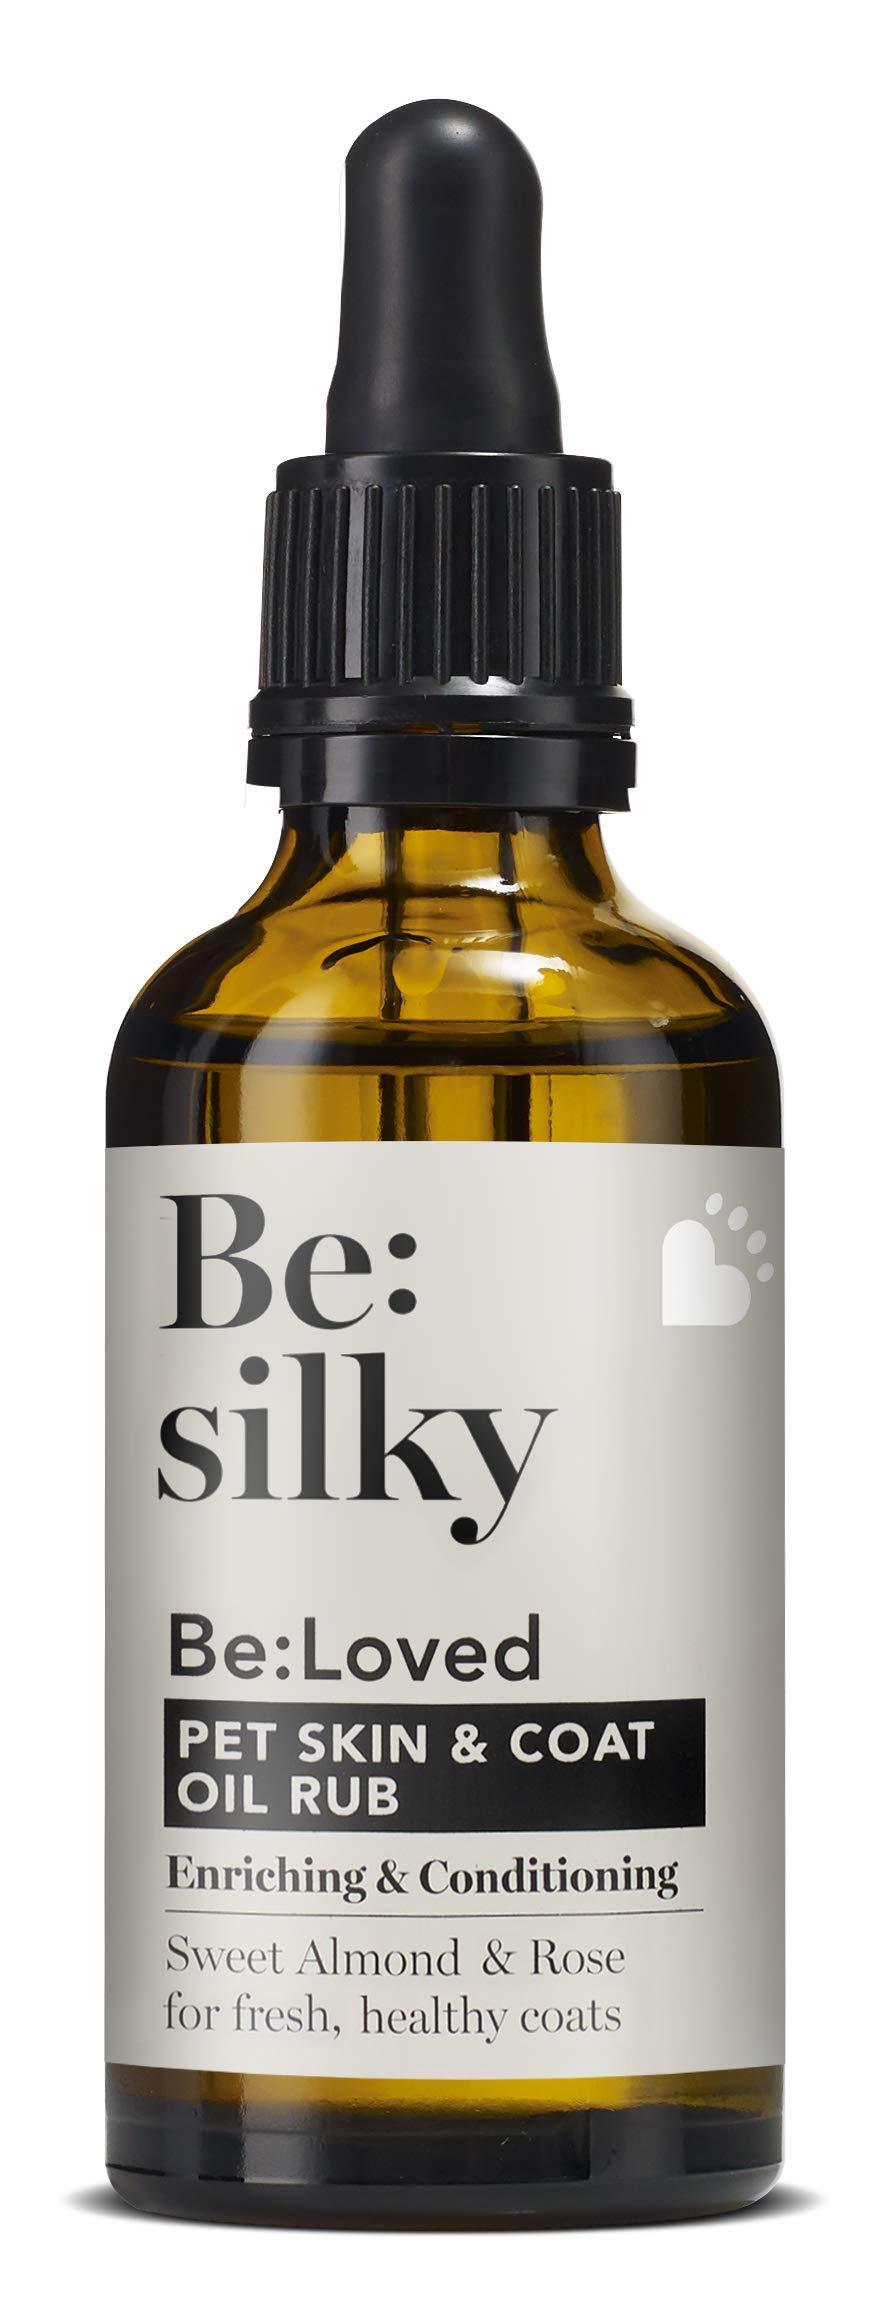 Be:Loved silky Pet Skin & Coat Oil Rub Enriching & Conditioning, Natural Ingredients Sweet Almond & Vitamin E Oils - 50ml, green - PawsPlanet Australia